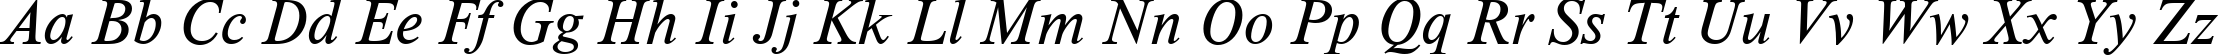 Пример написания английского алфавита шрифтом TimelessTCYLig Italic